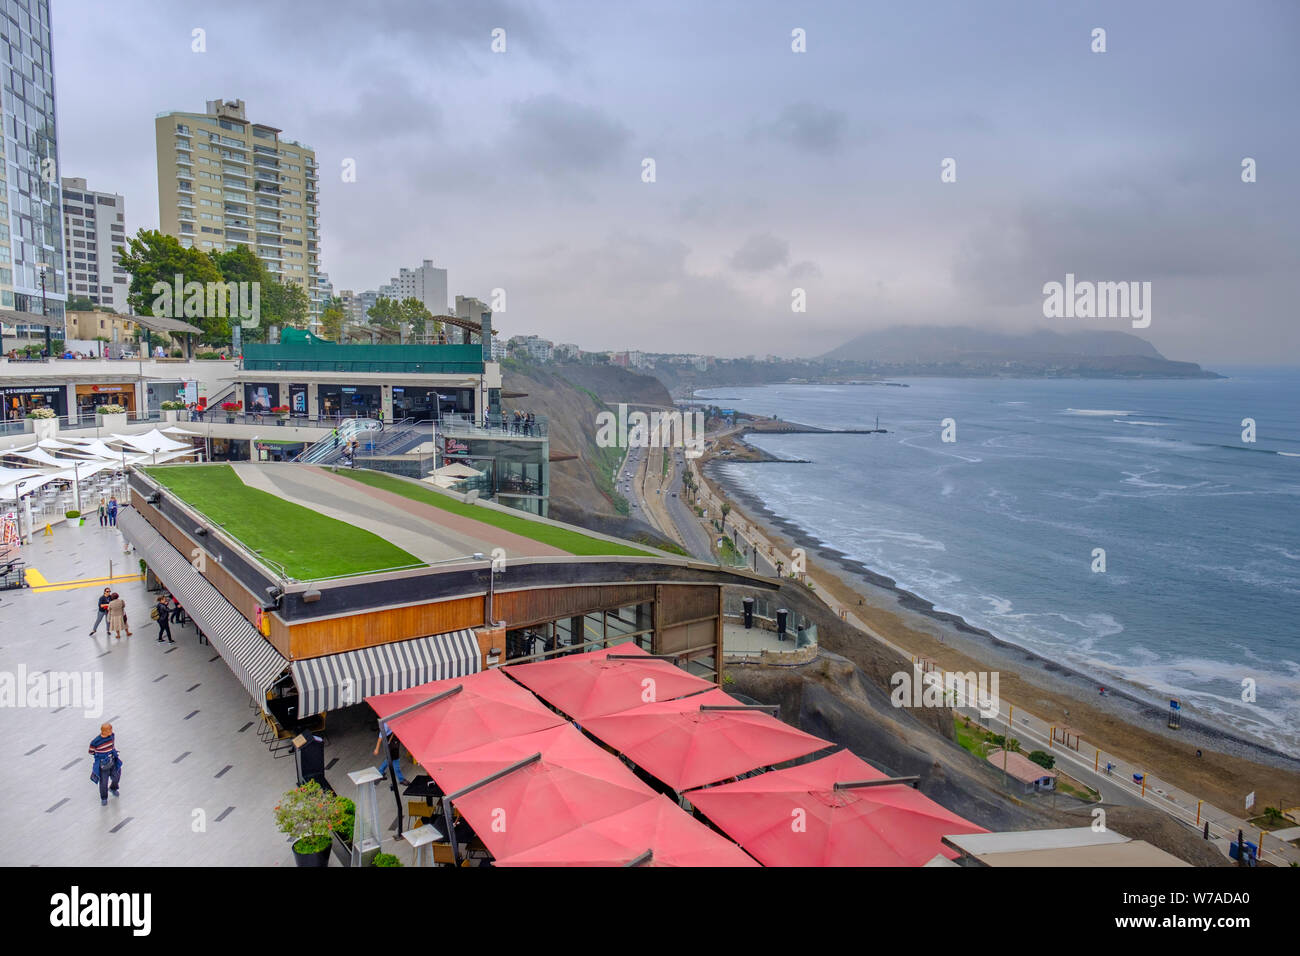 Peru Küste, Larcomar Einkaufszentrum in Malecon de La Reserva, Costa Verde, Malecón de La Reserva, Miraflores Bezirk, Lima, Peru Stockfoto